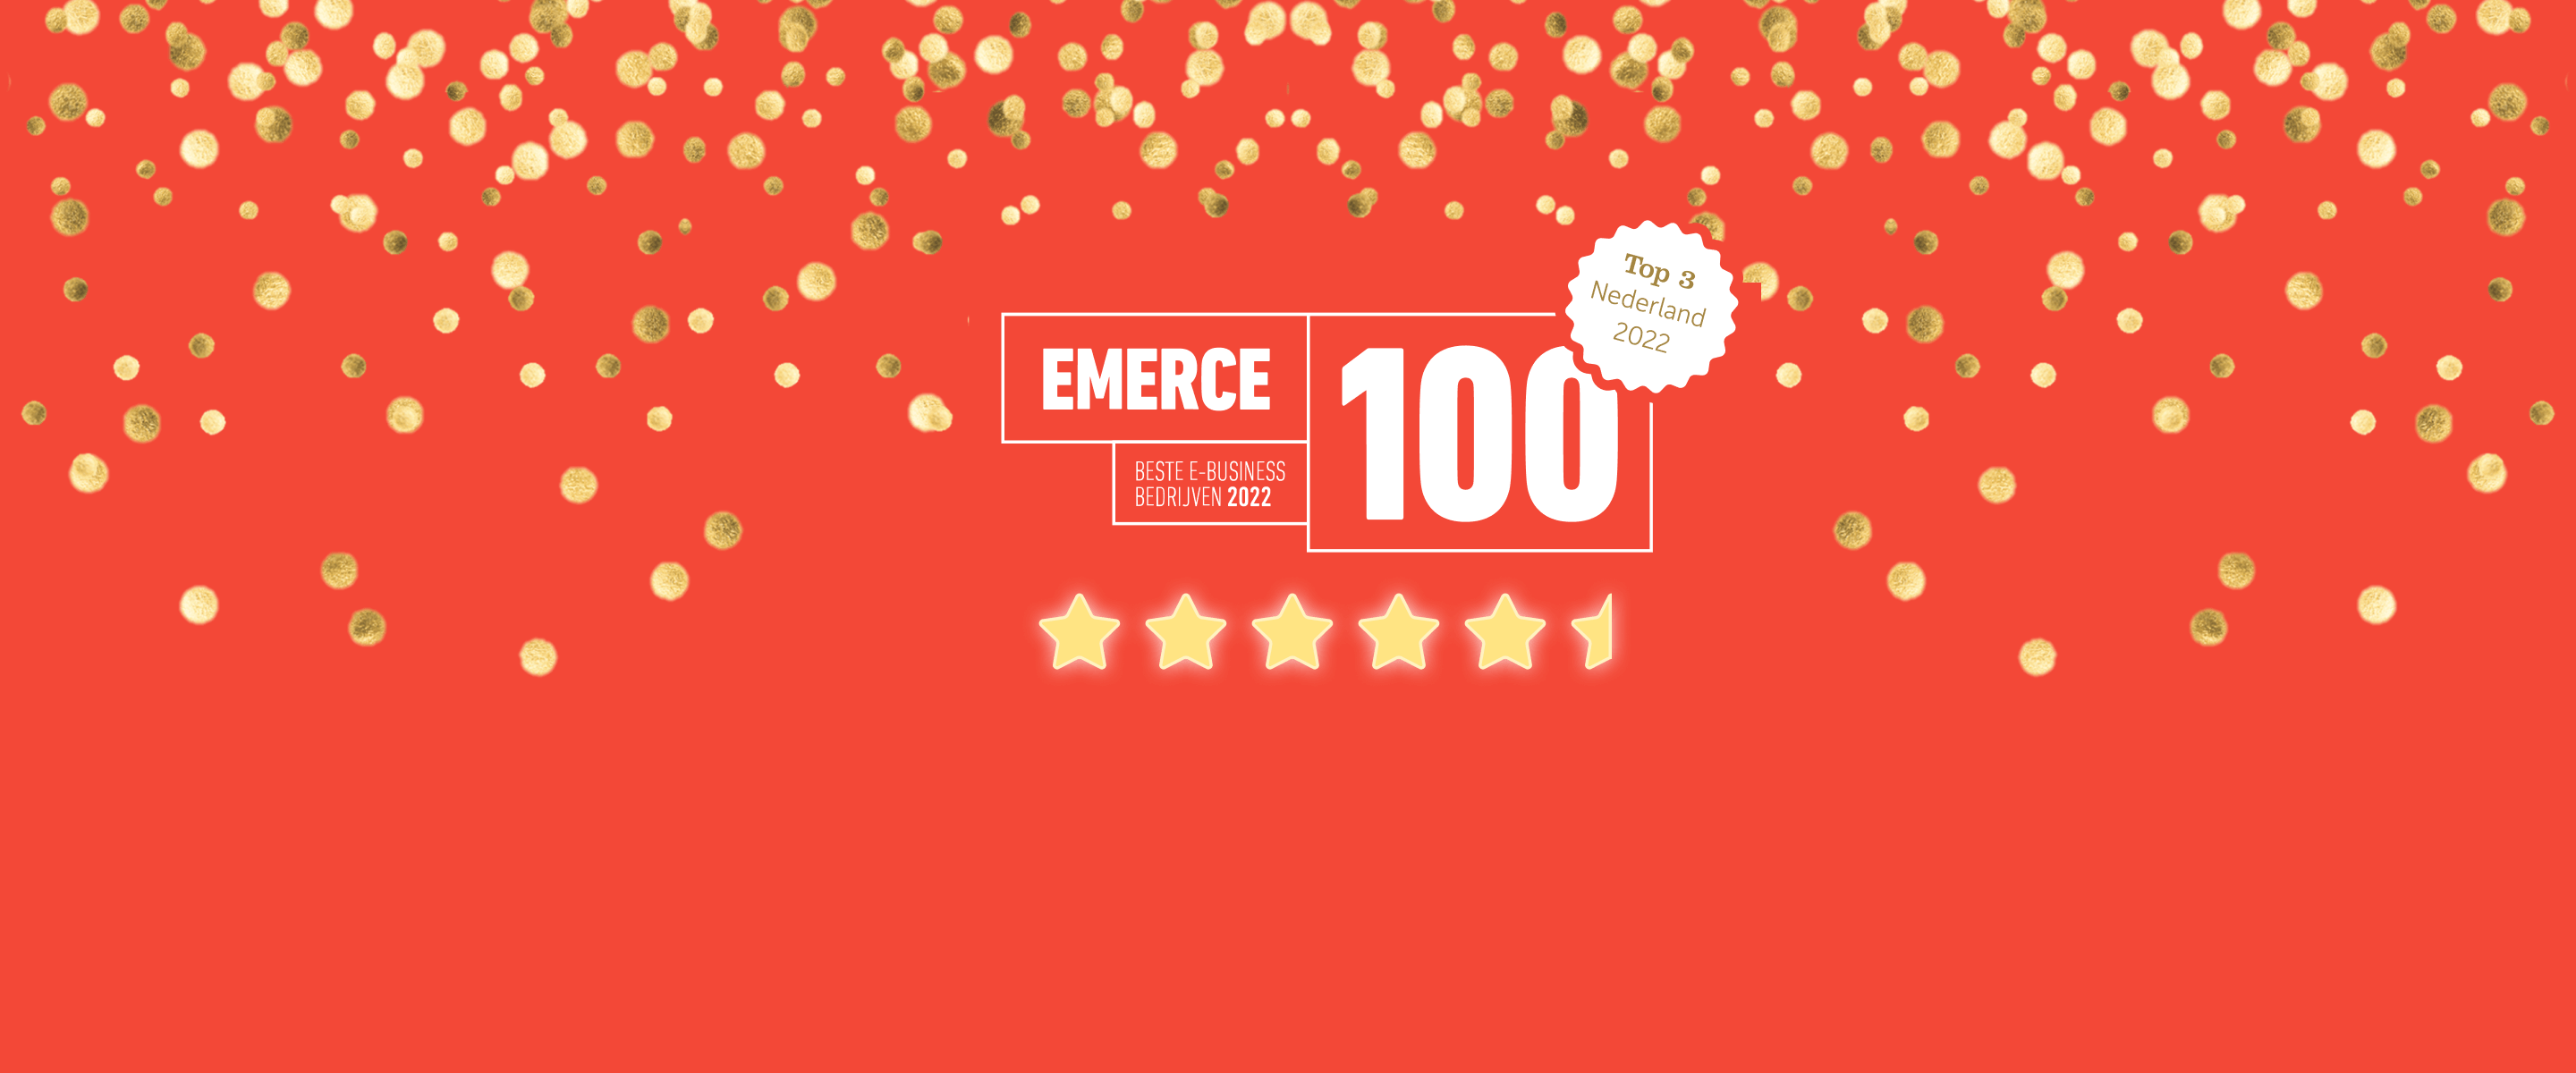 Emerce100-2022-blog-header-3